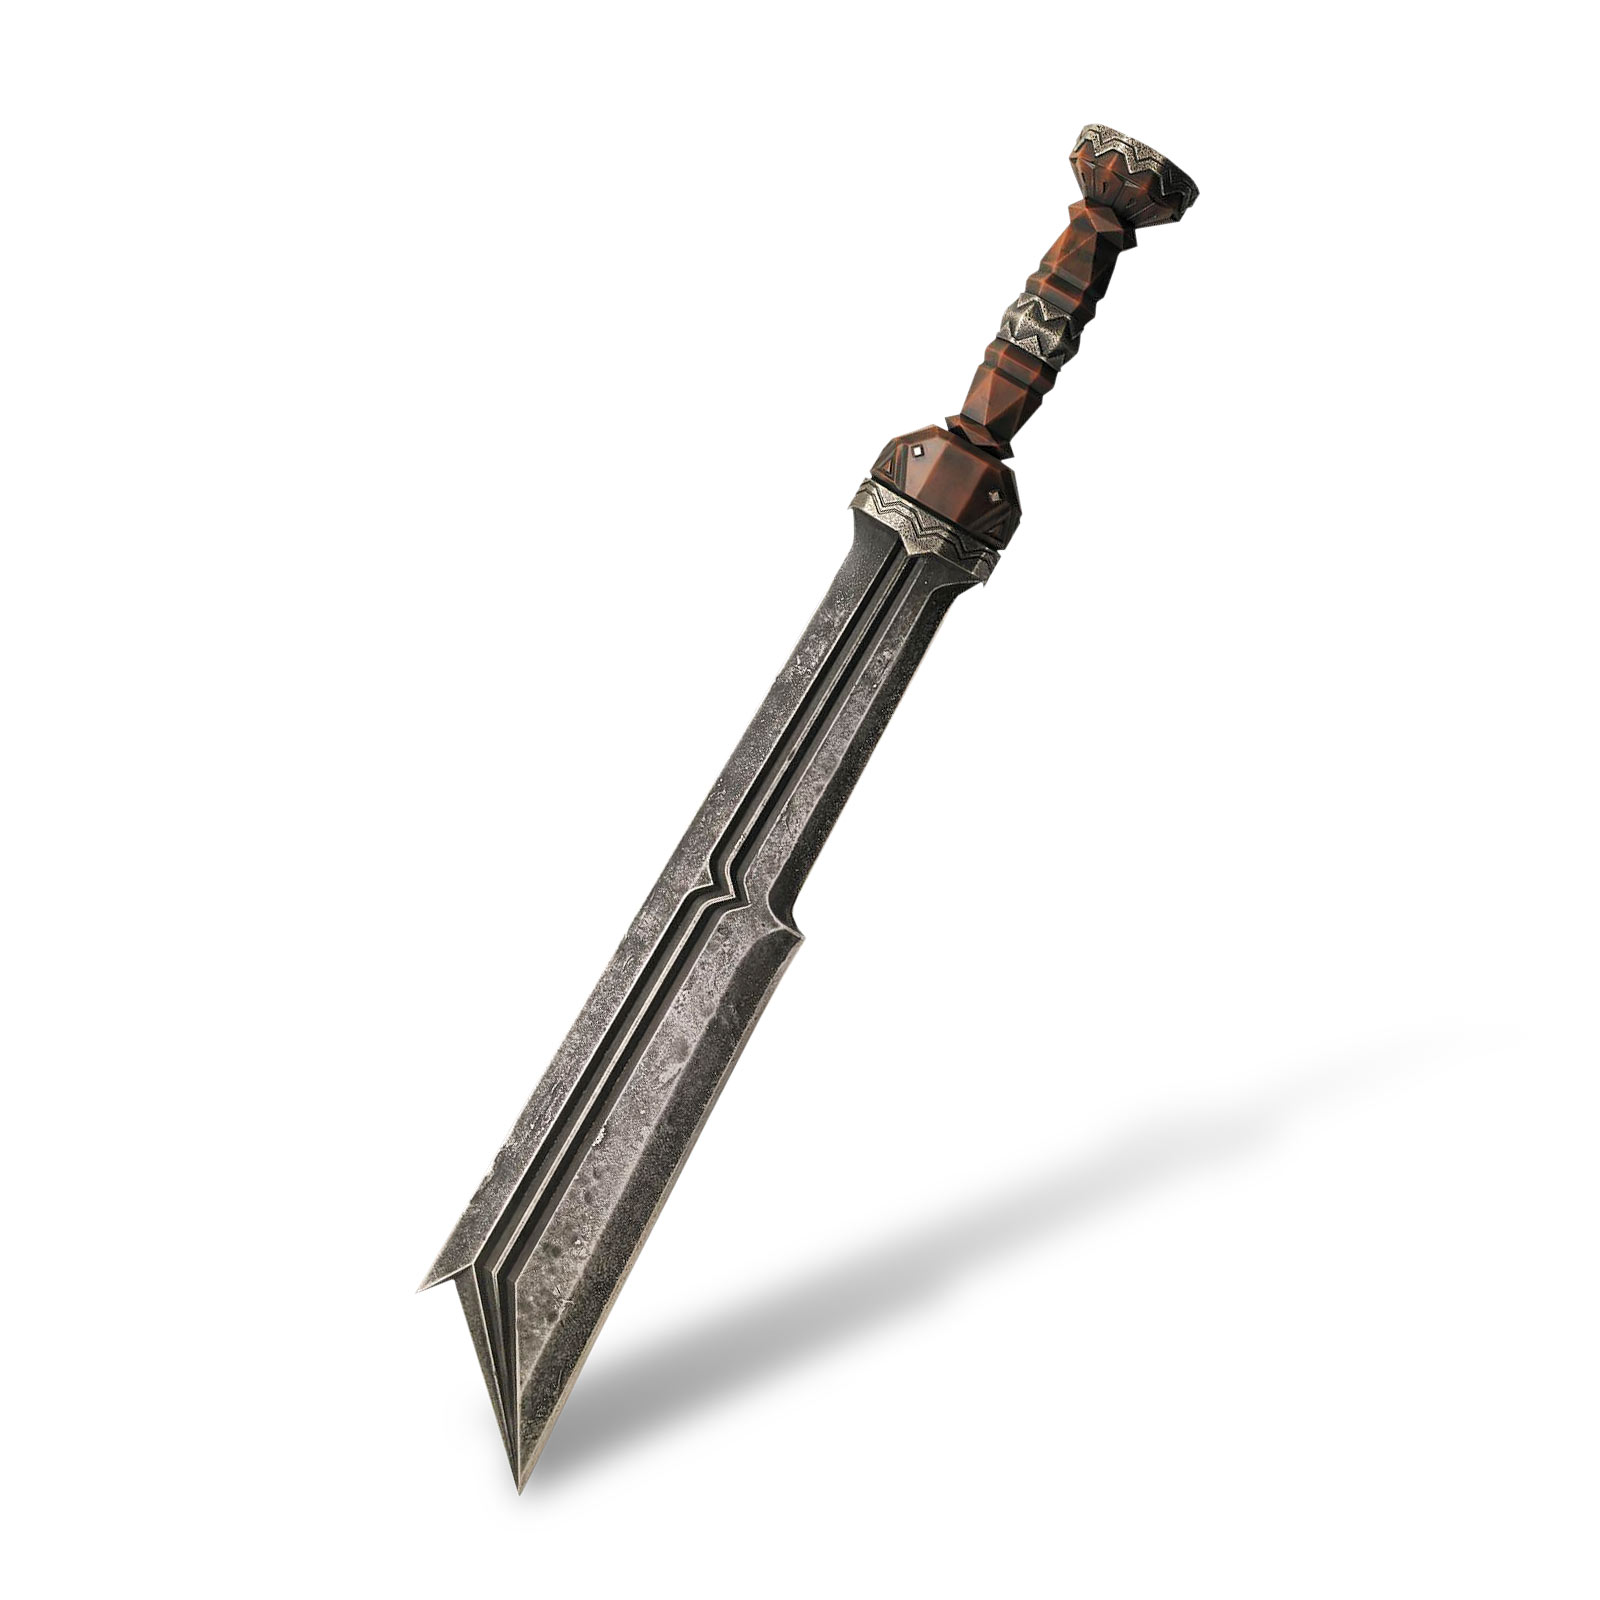 The Hobbit - Fili's Sword